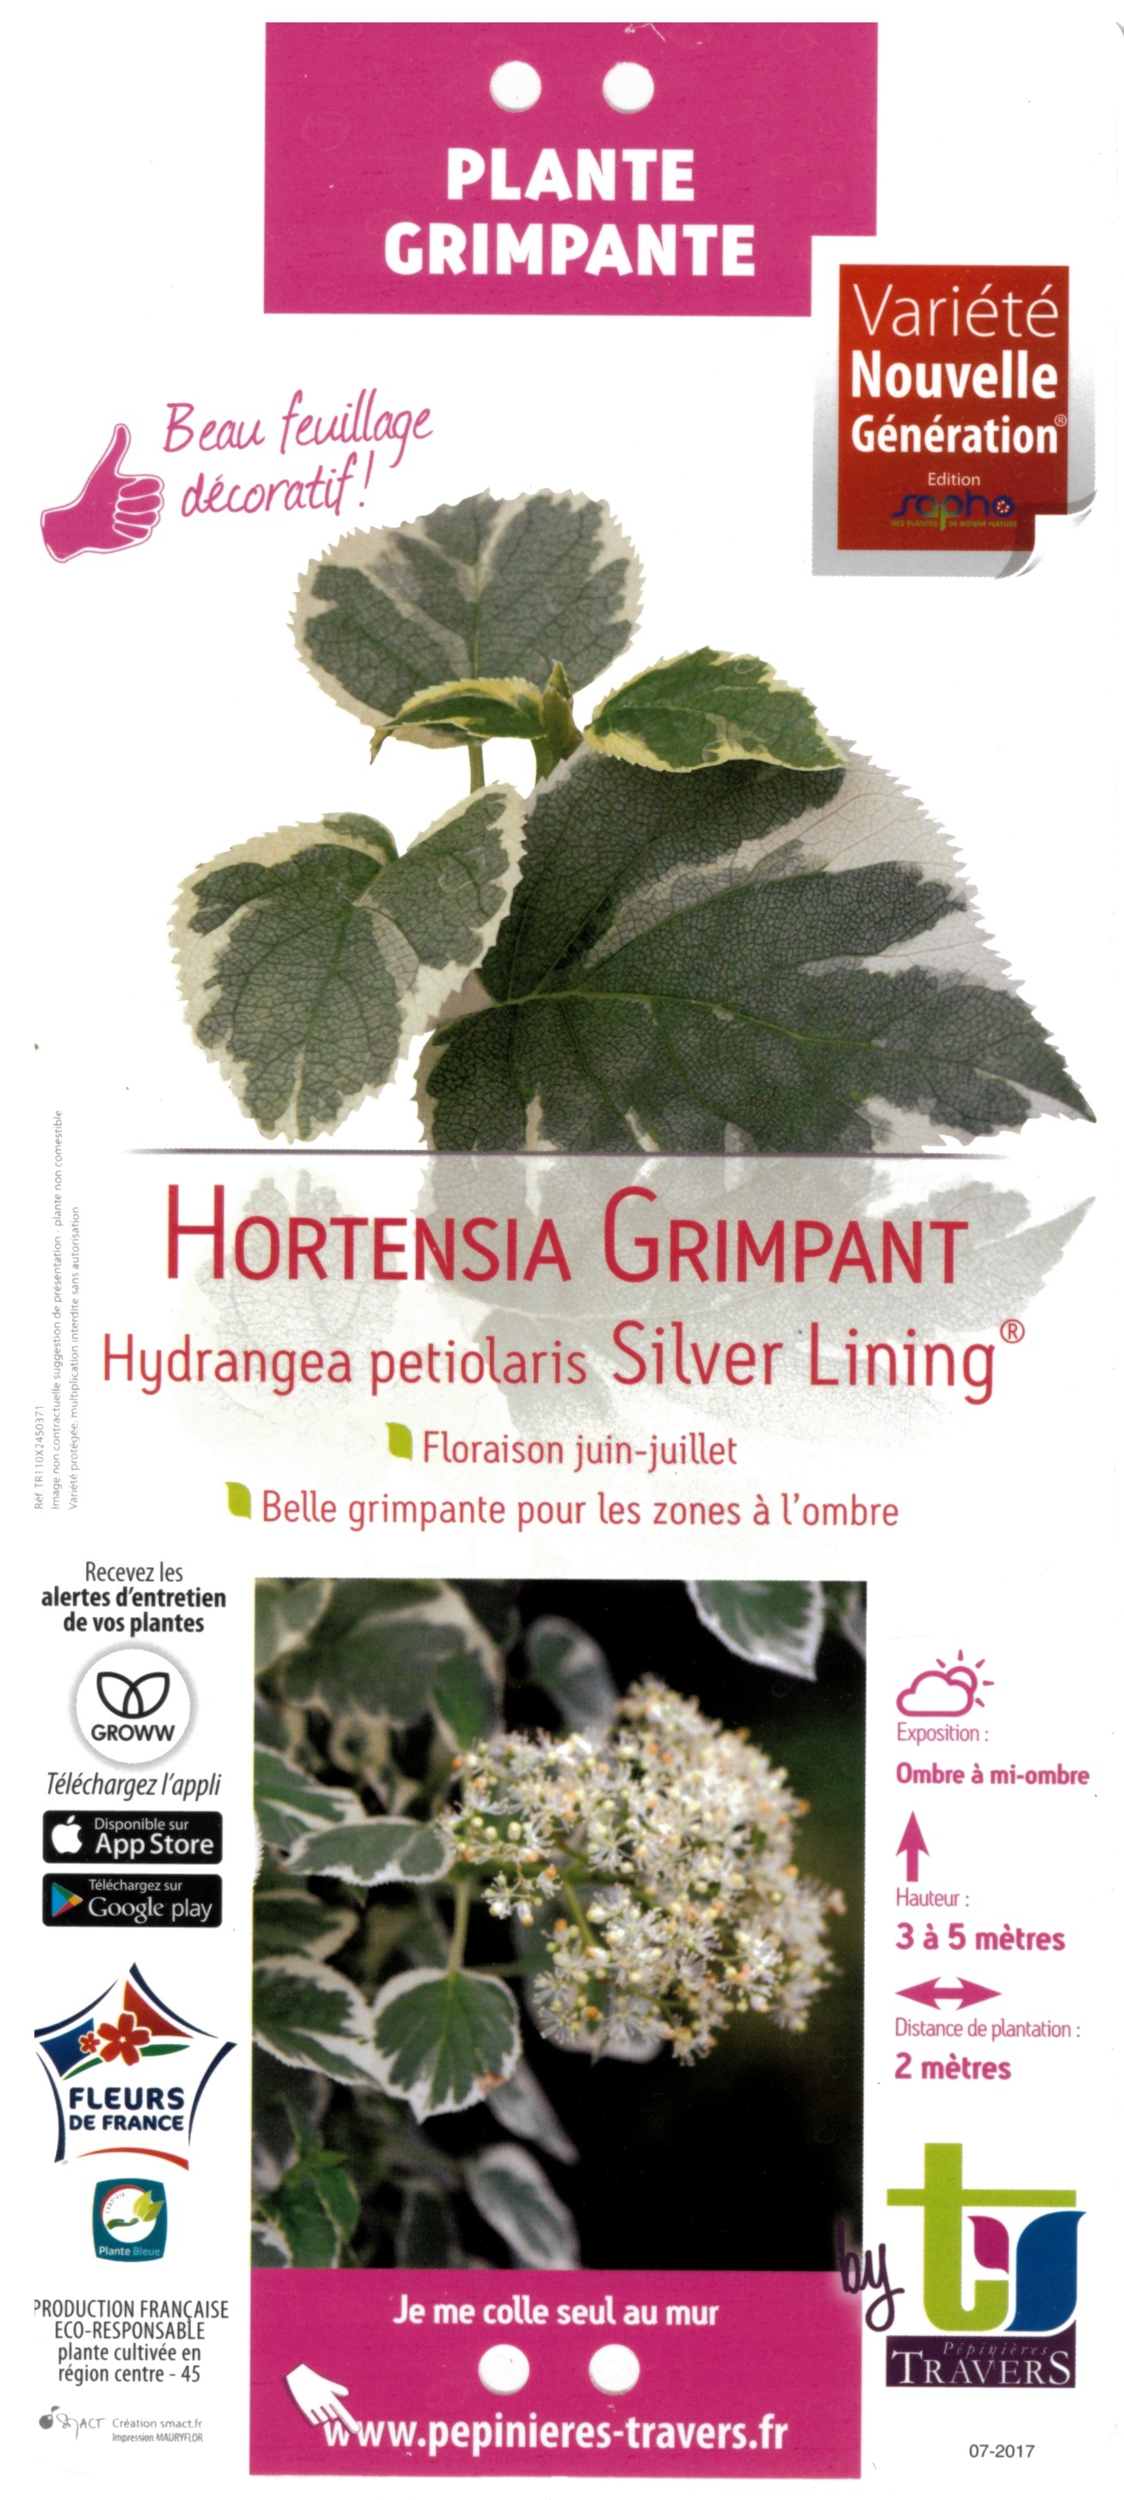 Hortensia Grimpant Hydrangea petiolaris Silver Lining